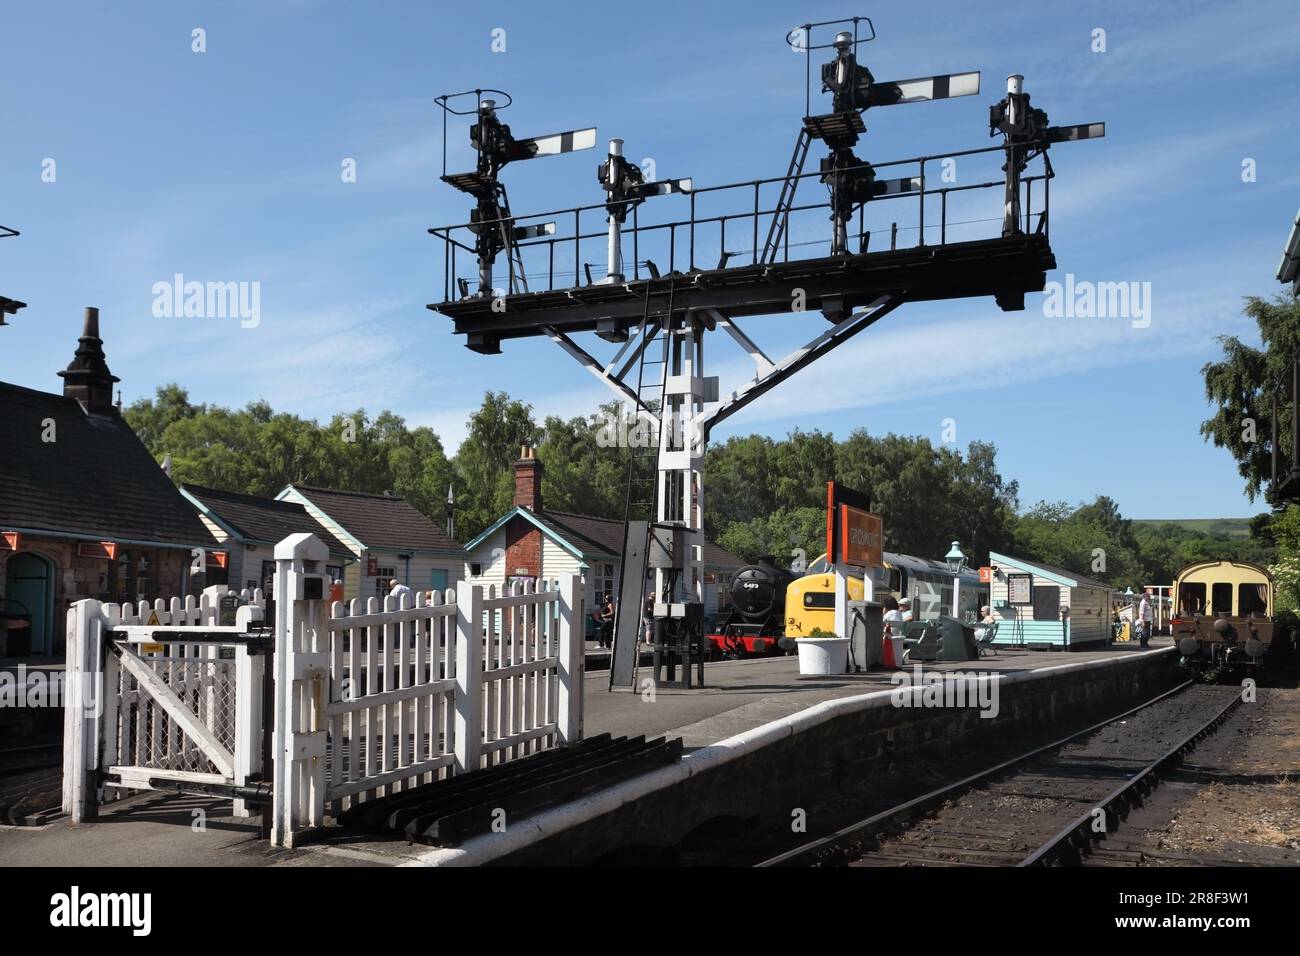 Semaphore signal gantry at Grosmont station, North Yorkshire Moors Railway, UK. Stock Photo